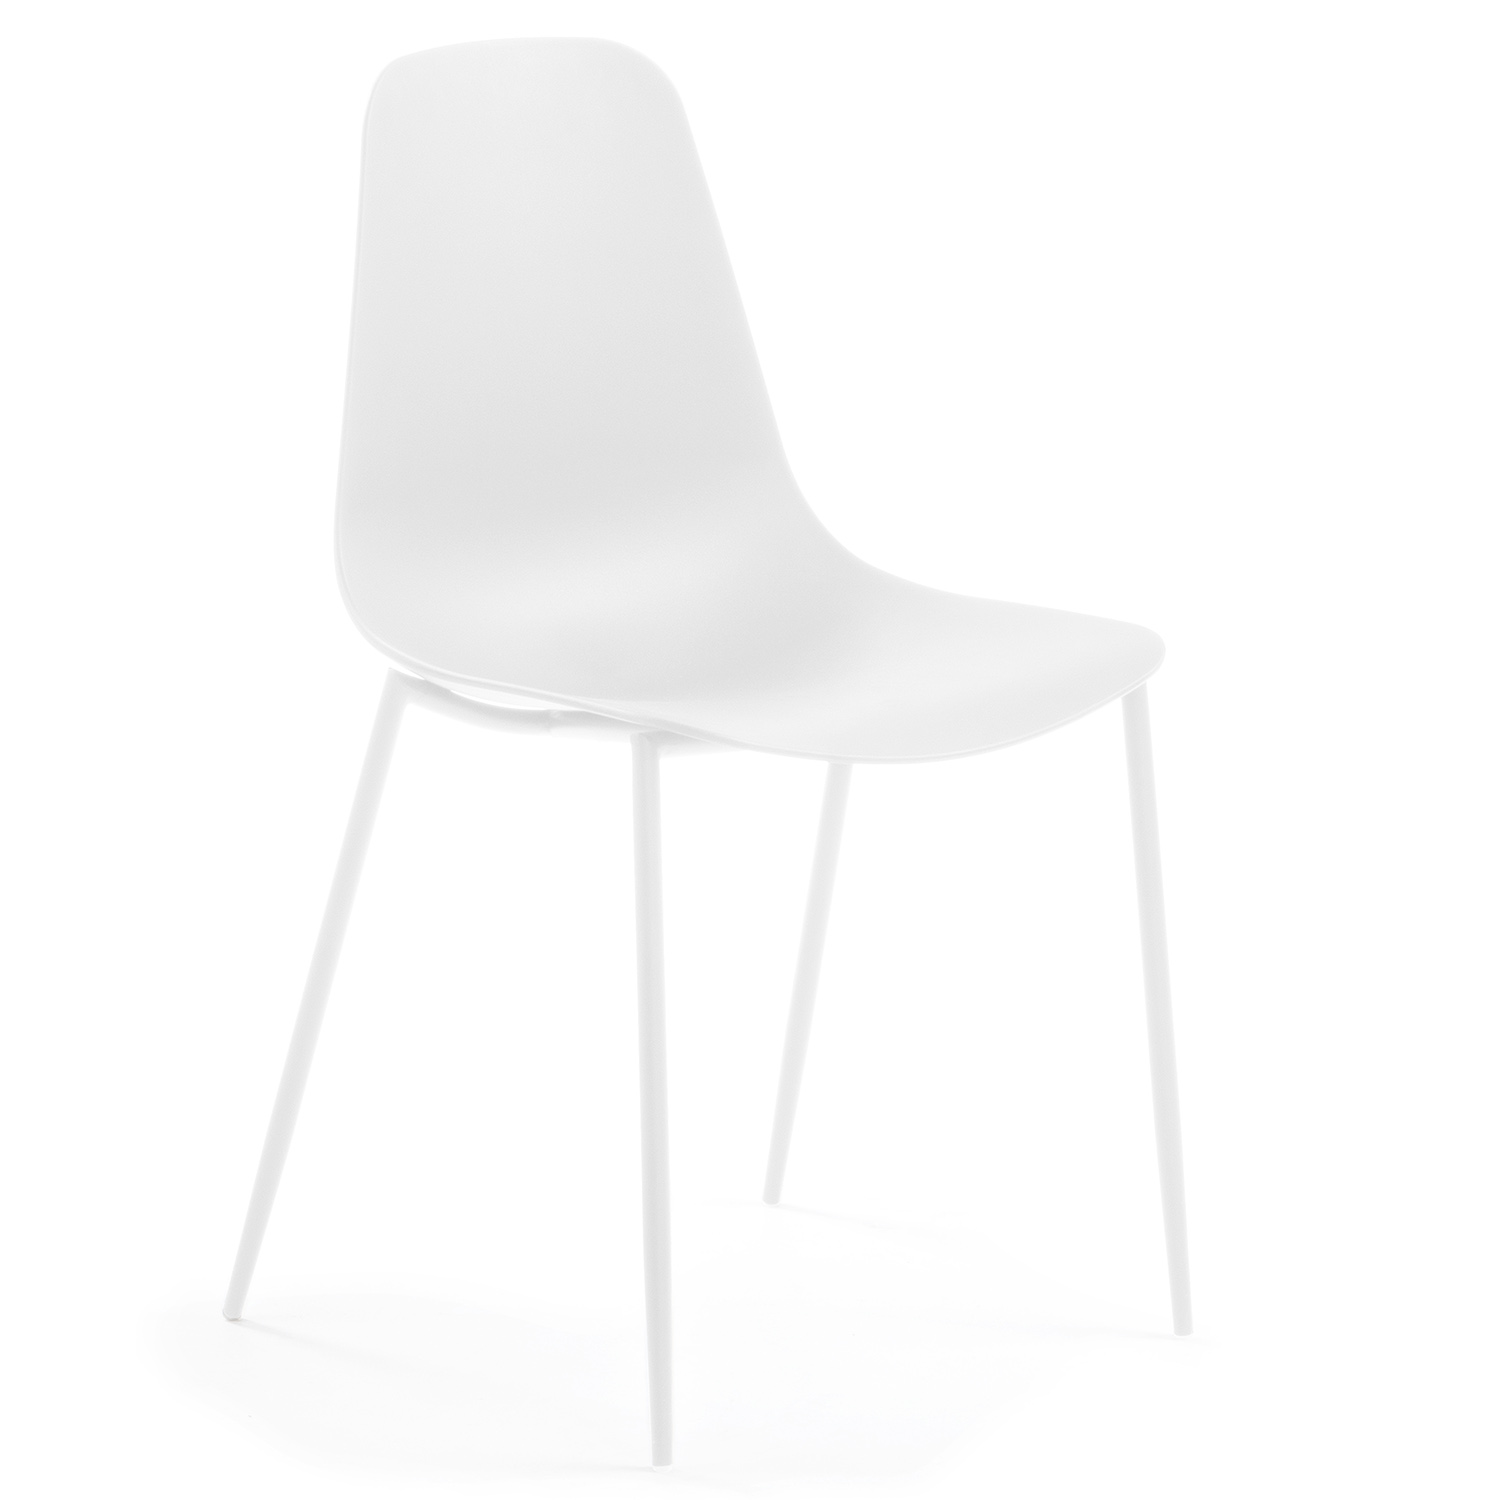 LAFORMA Wassu spisebordsstol - hvid plastik og stål